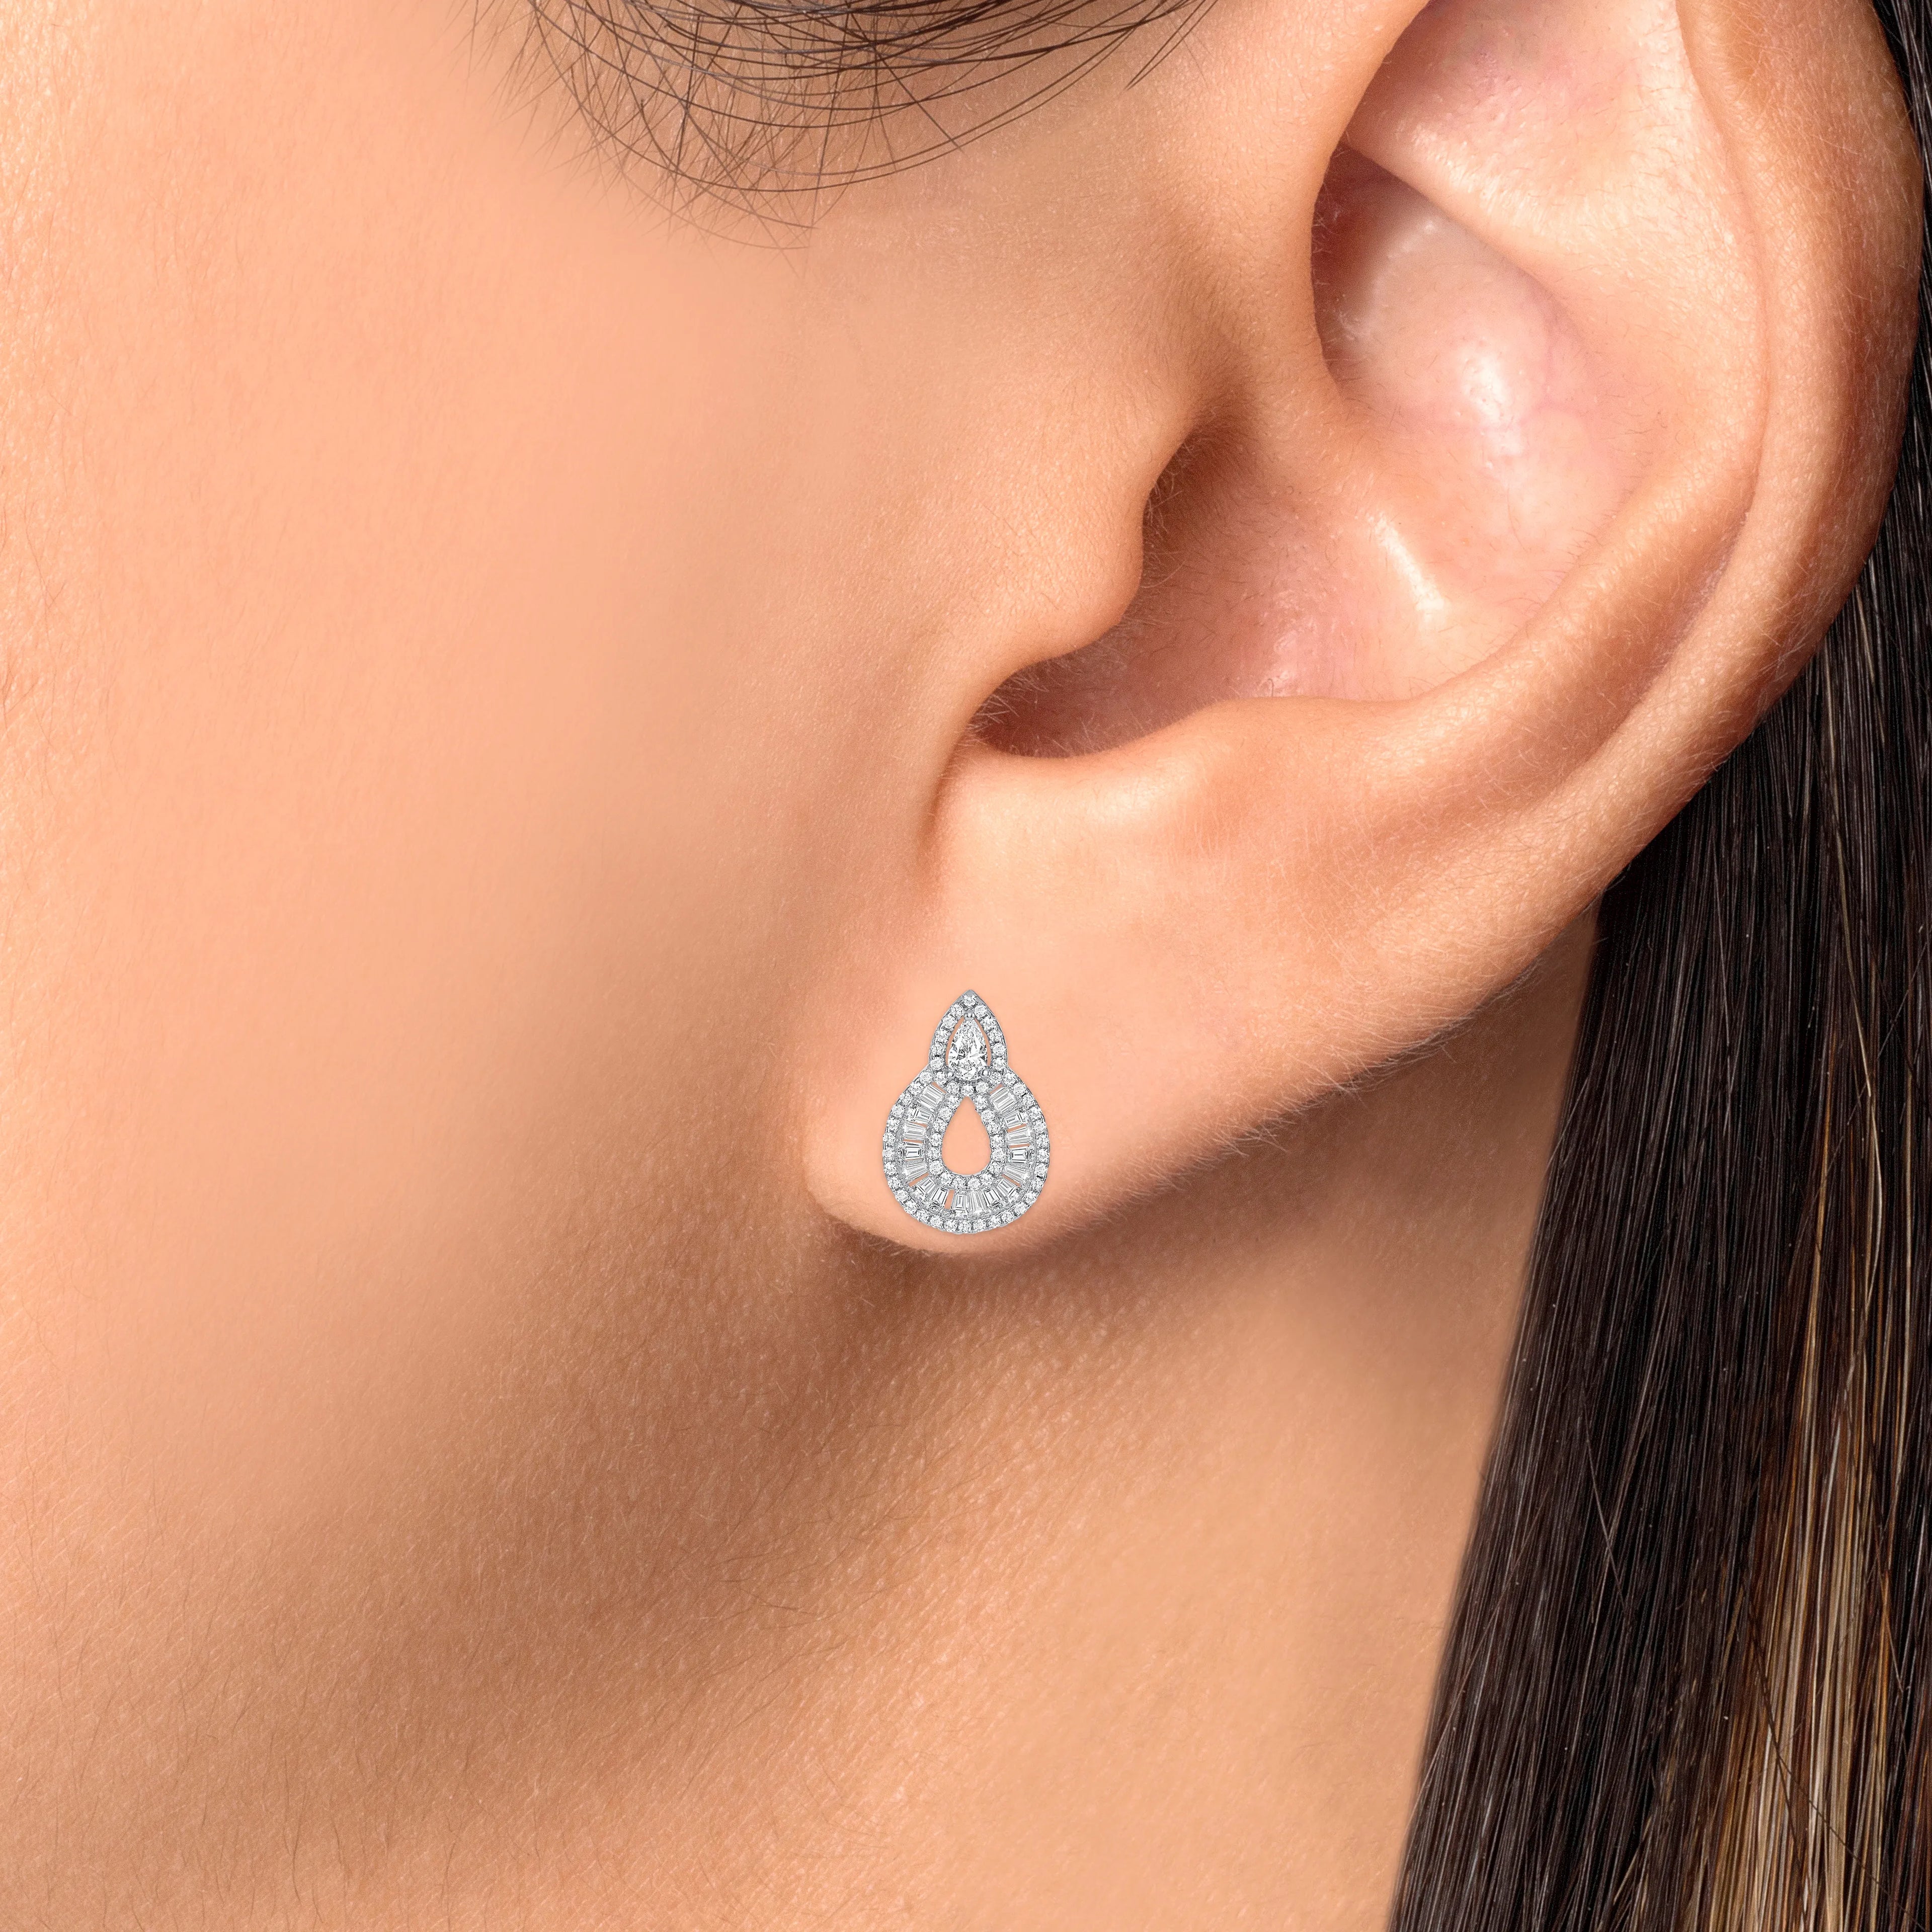 925 Sterling Silver Pear Cut CZ with Round &amp; Baguette Cut Loops Teardrop Pendant &amp; Earrings Jewelry Set